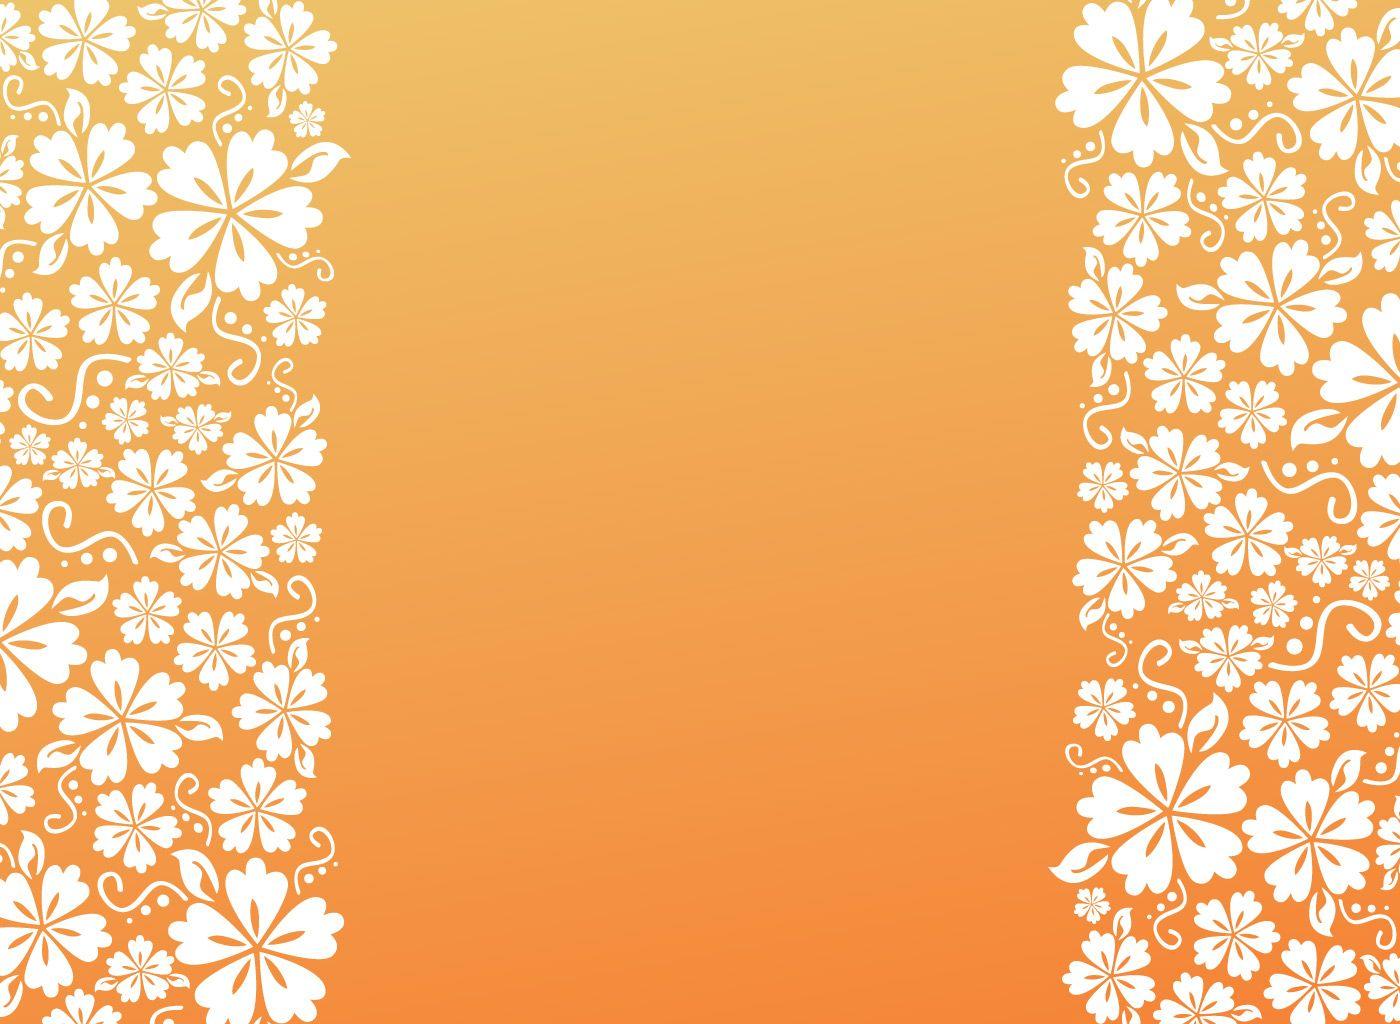 Flowers On Orange Cute Quality Image